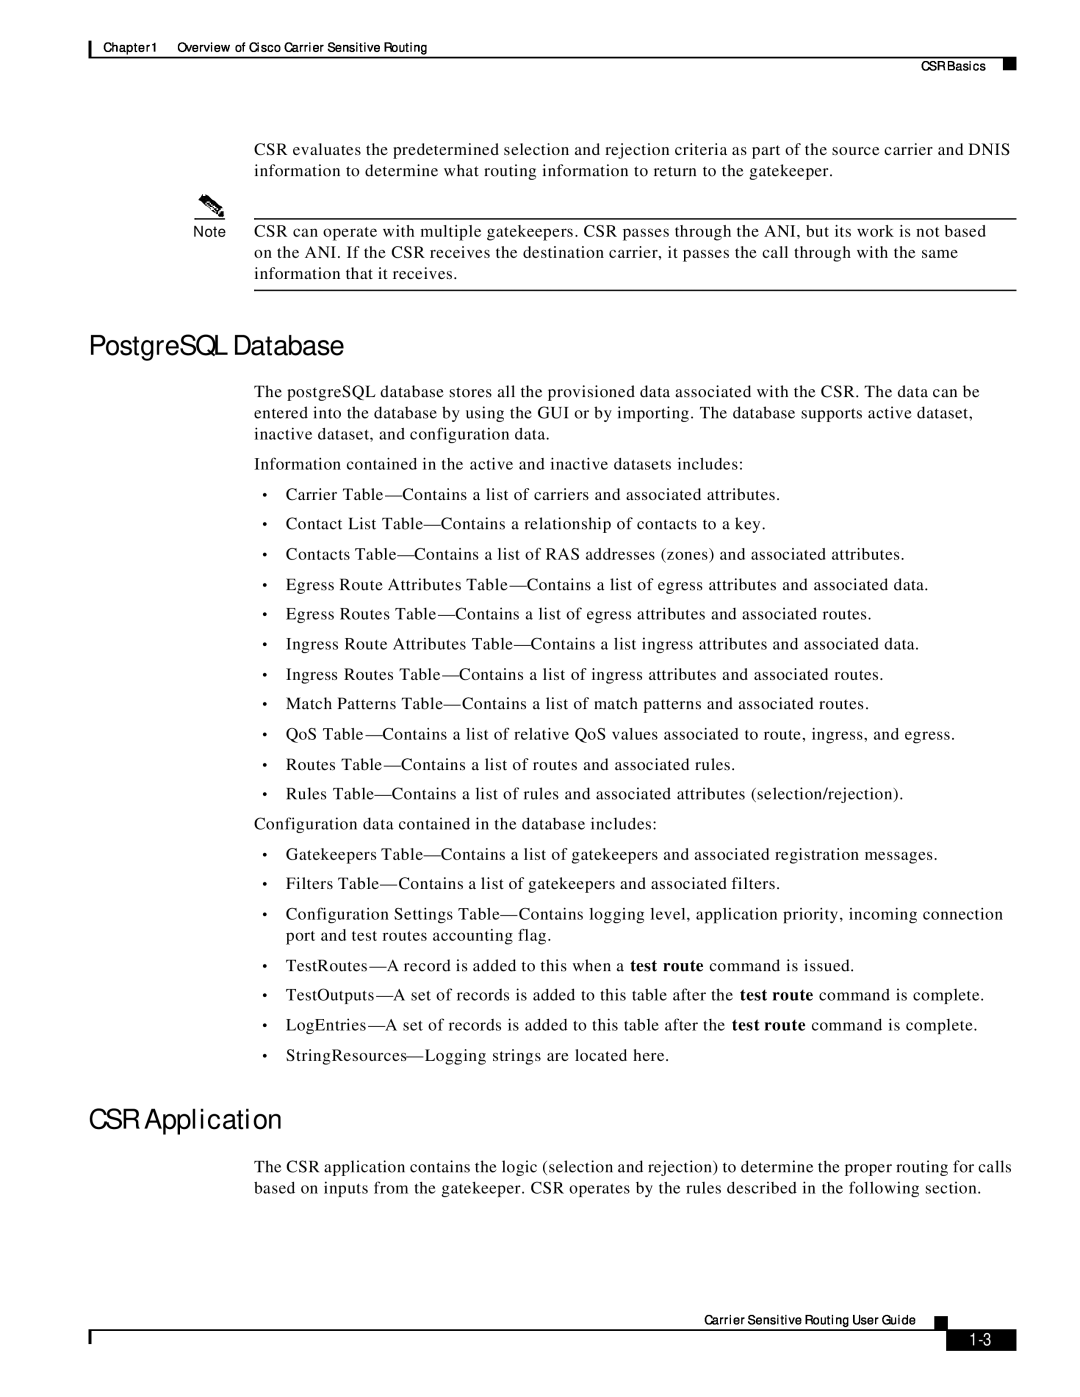 Cisco Systems Version 1.1 manual PostgreSQL Database, CSR Application 